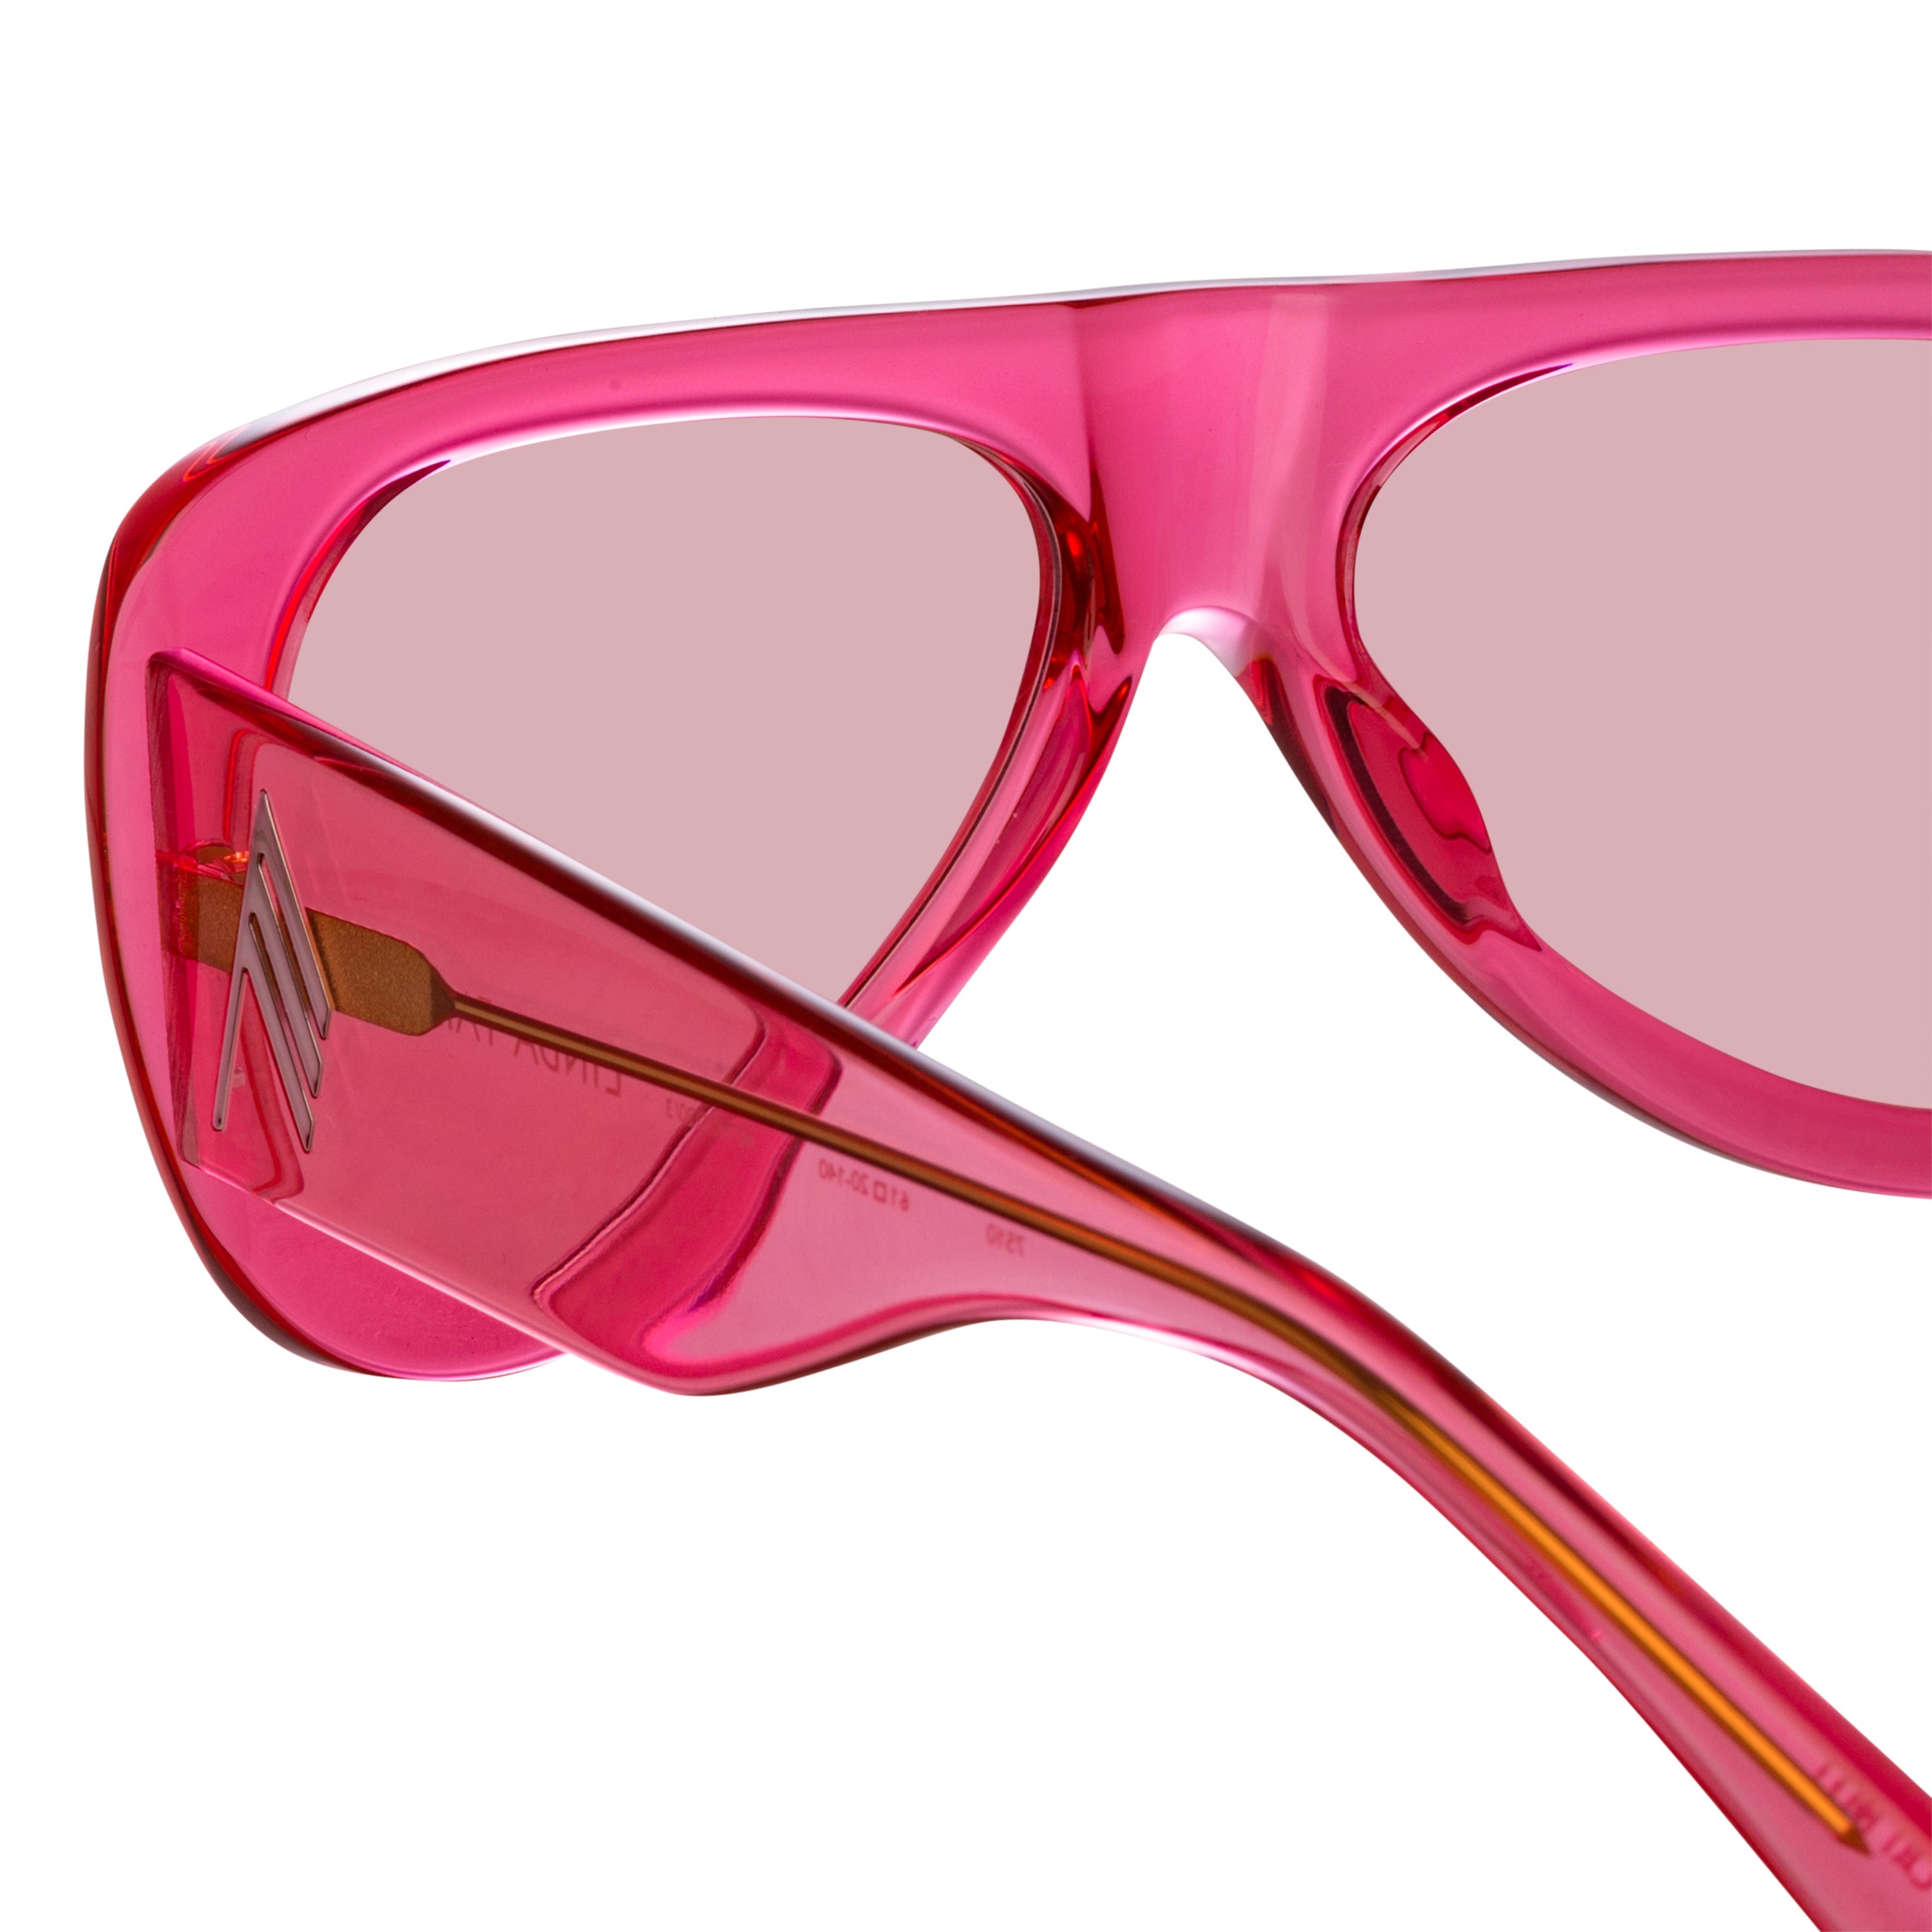 Lipsy London Modern Cateye Sunglasses - Black/Coral Pink